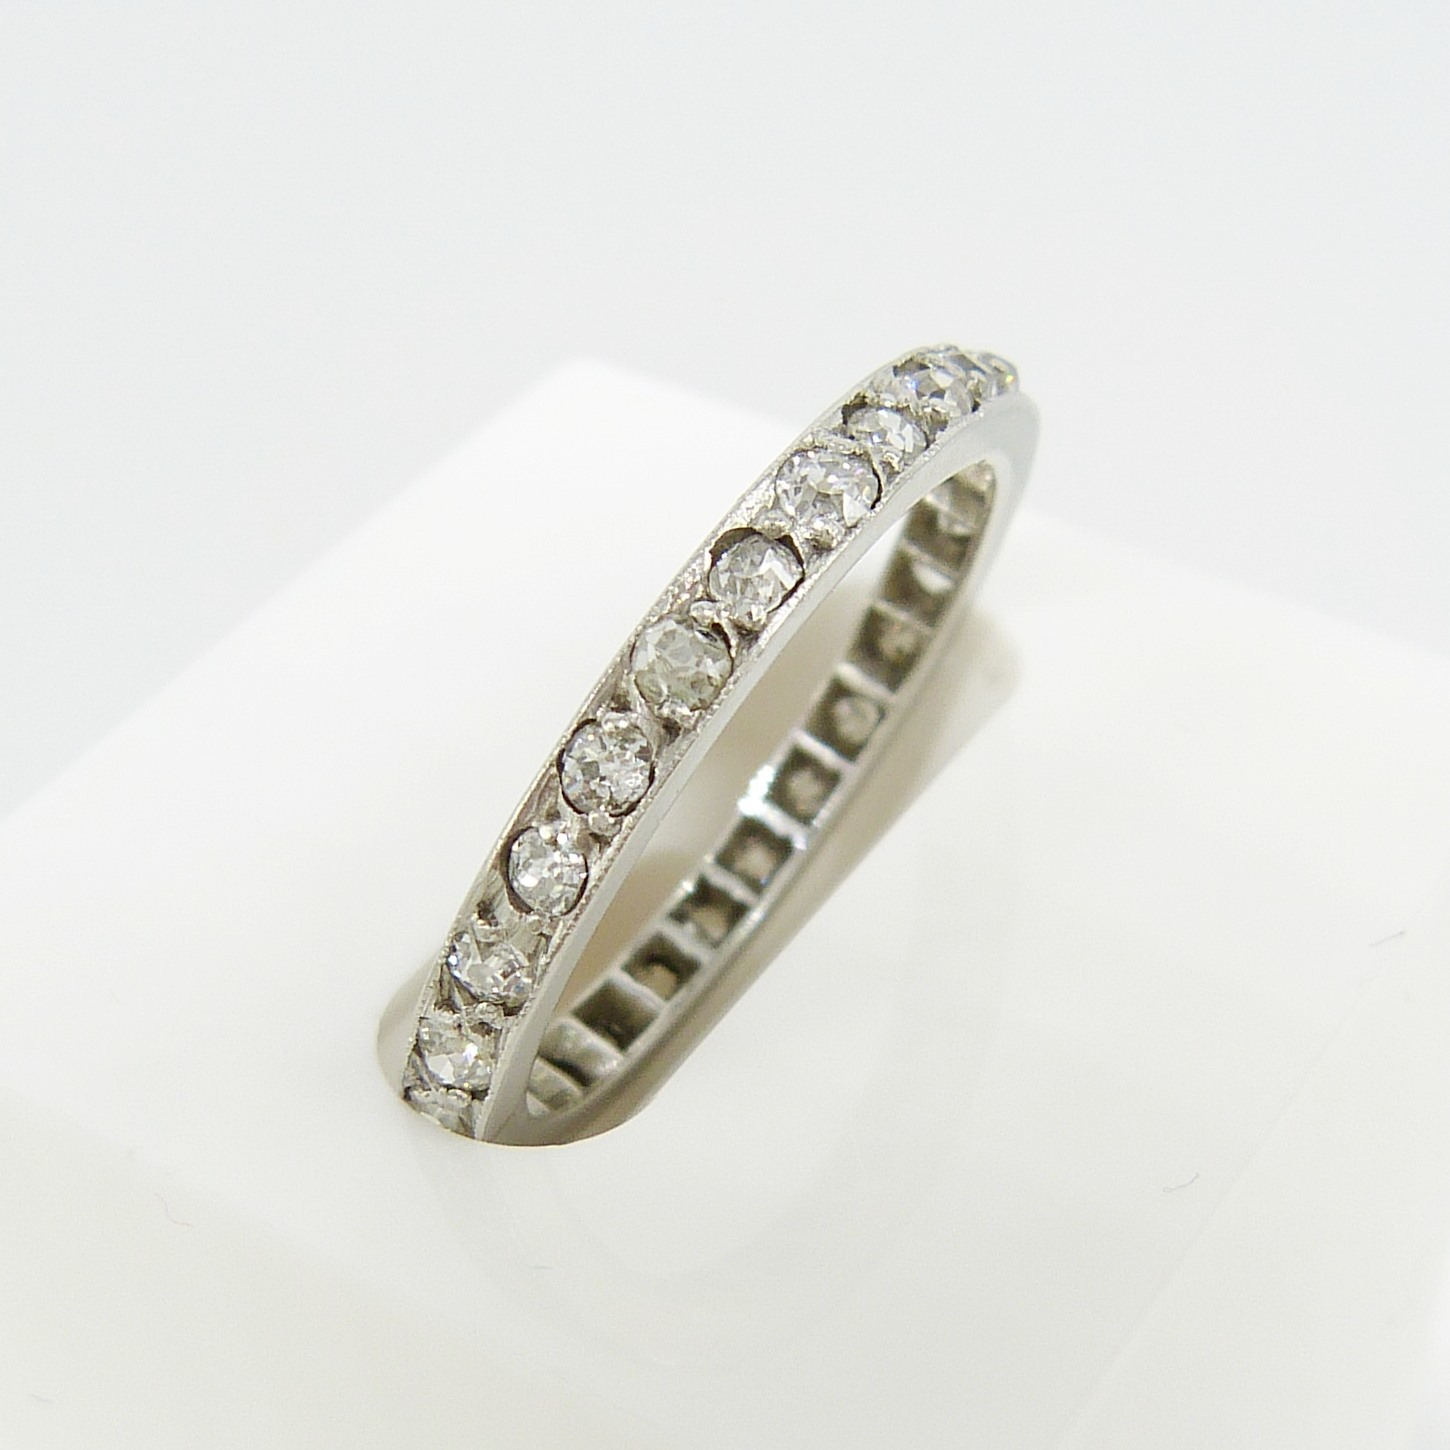 Genuine antique platinum full eternity ring set with 0.85 carats old-cut diamonds - Image 3 of 8